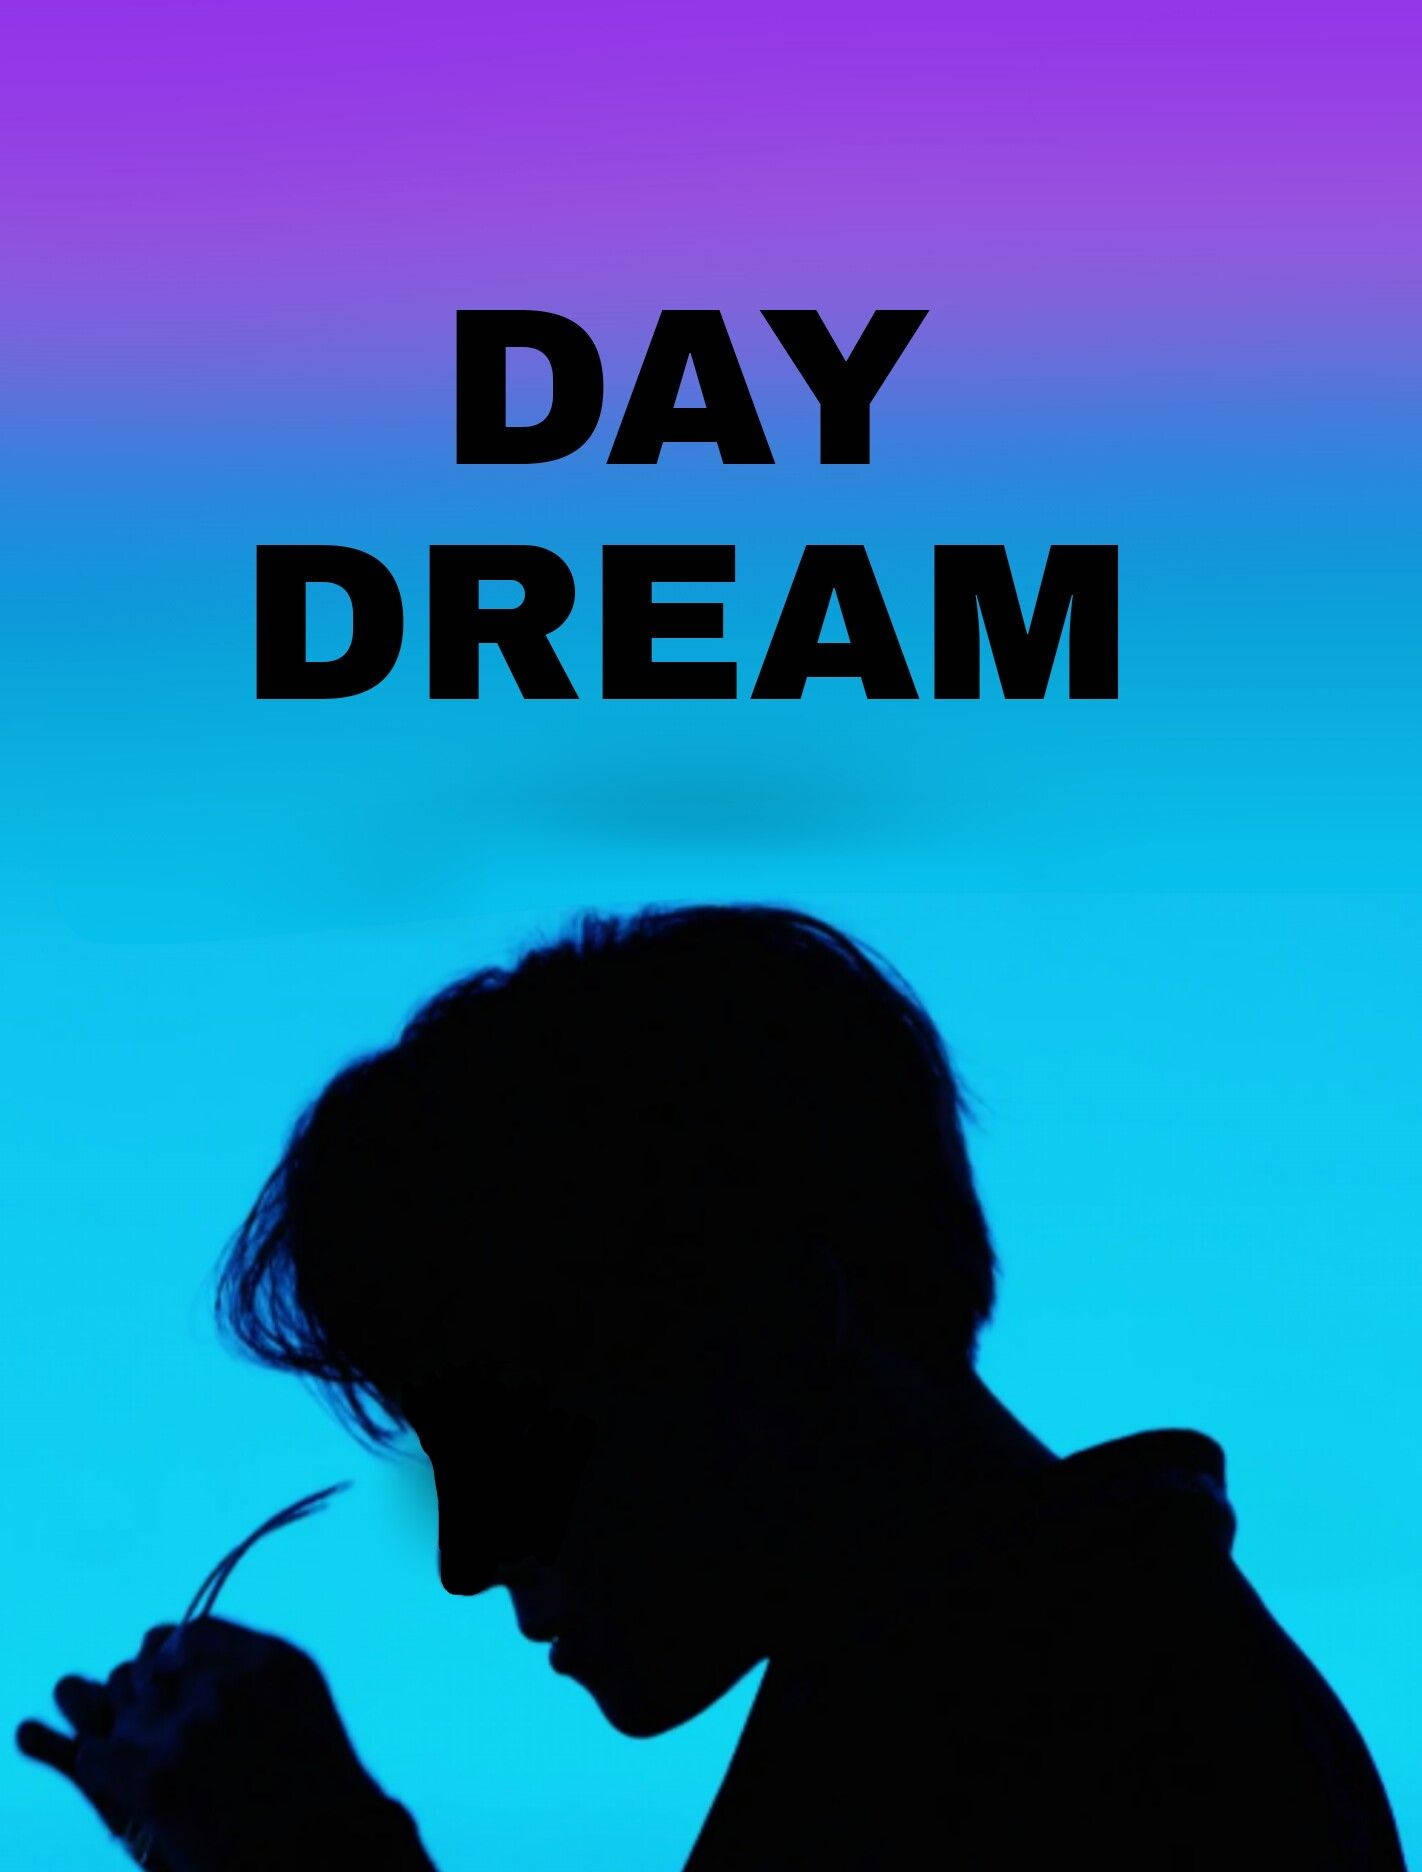 Bts J-hope Daydream